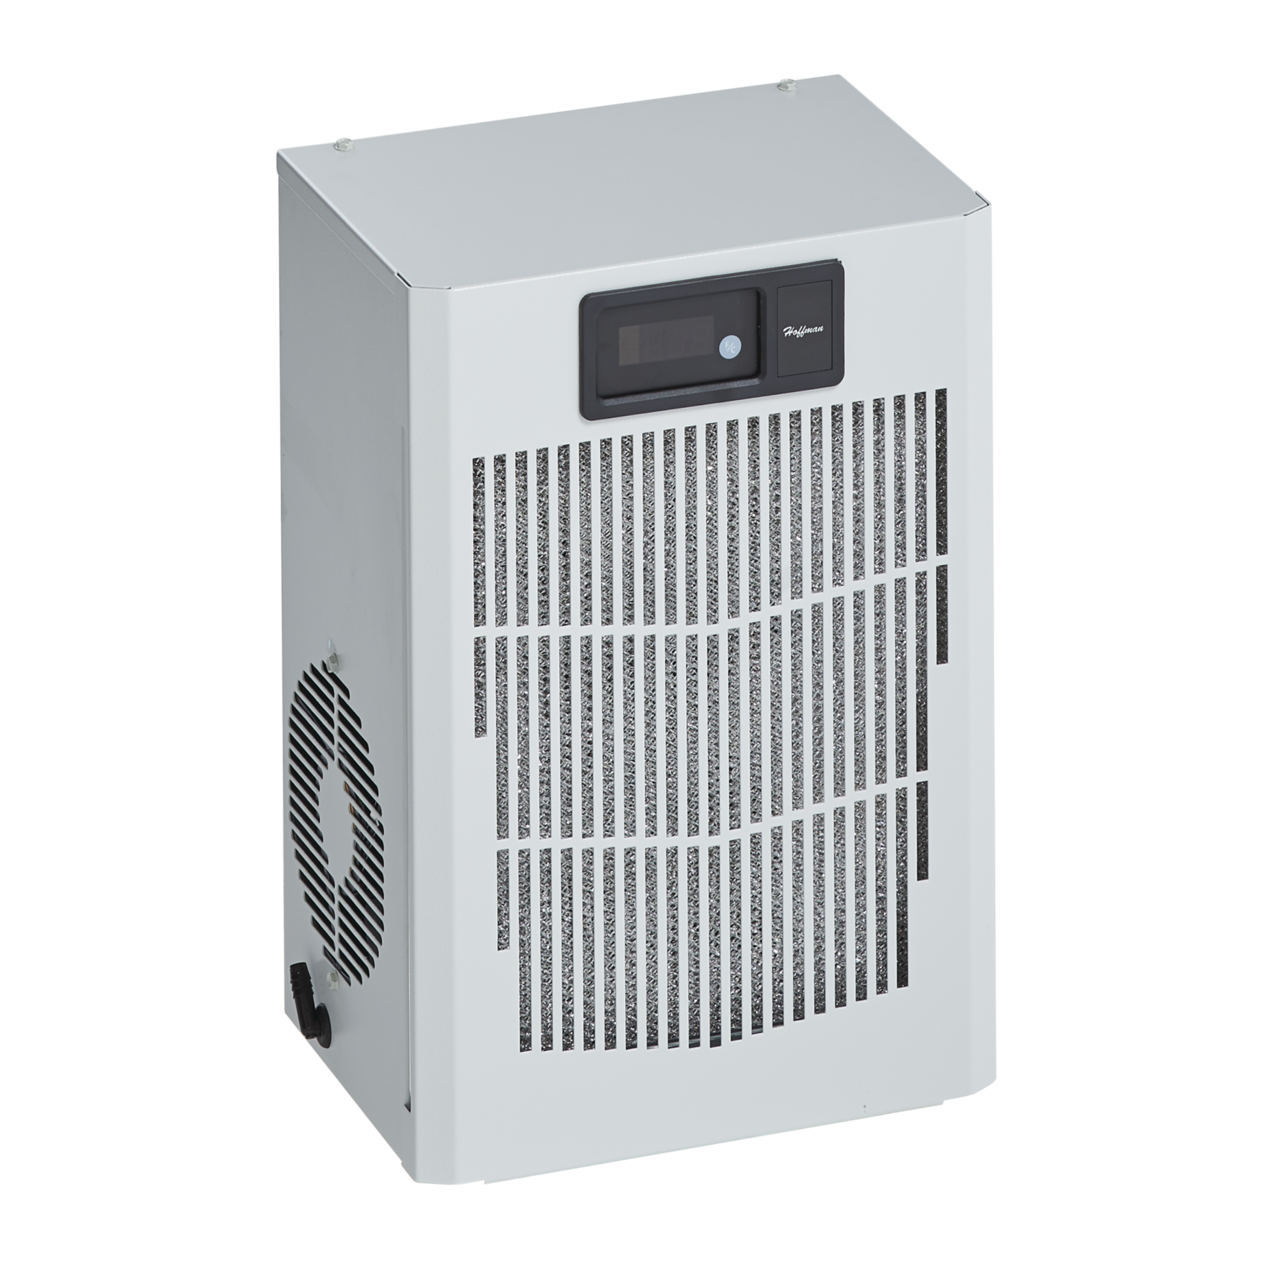 nVent HOFFMAN Spectracool™ N170116G010 MCLG Compact Indoor Enclosure Air Conditioner, 115 VAC, 3.9 A, 50/60 Hz, NEMA 12 Enclosure, 1025 Btu/hr